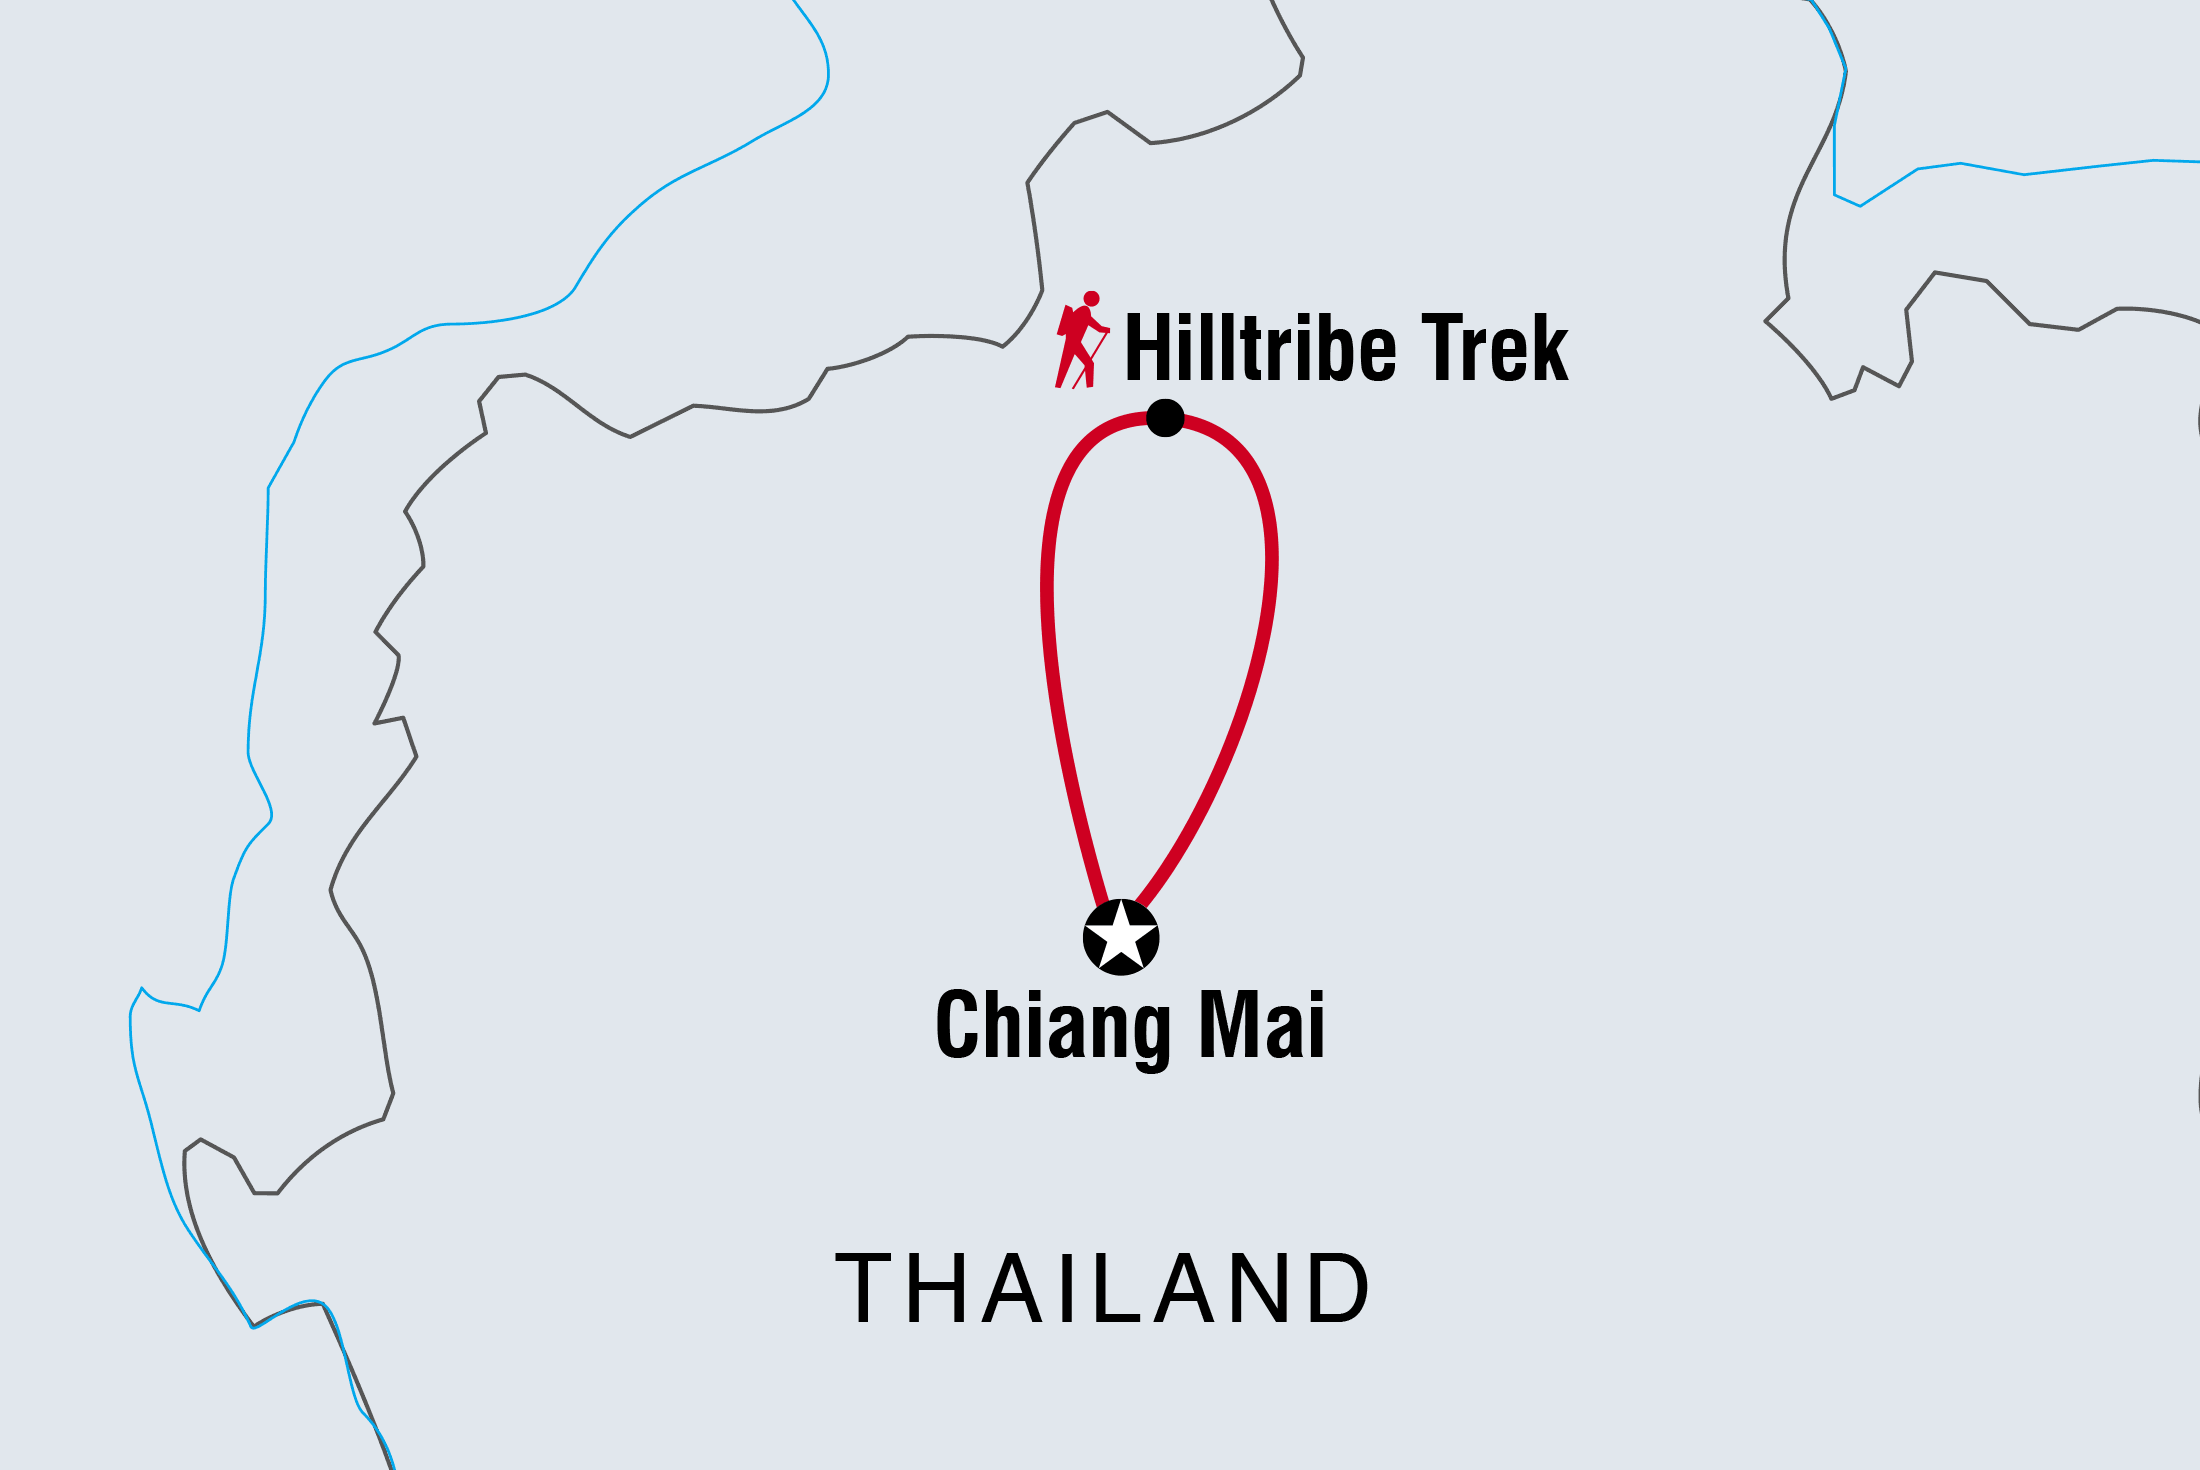 Map of Thailand Hilltribe Trek including Thailand